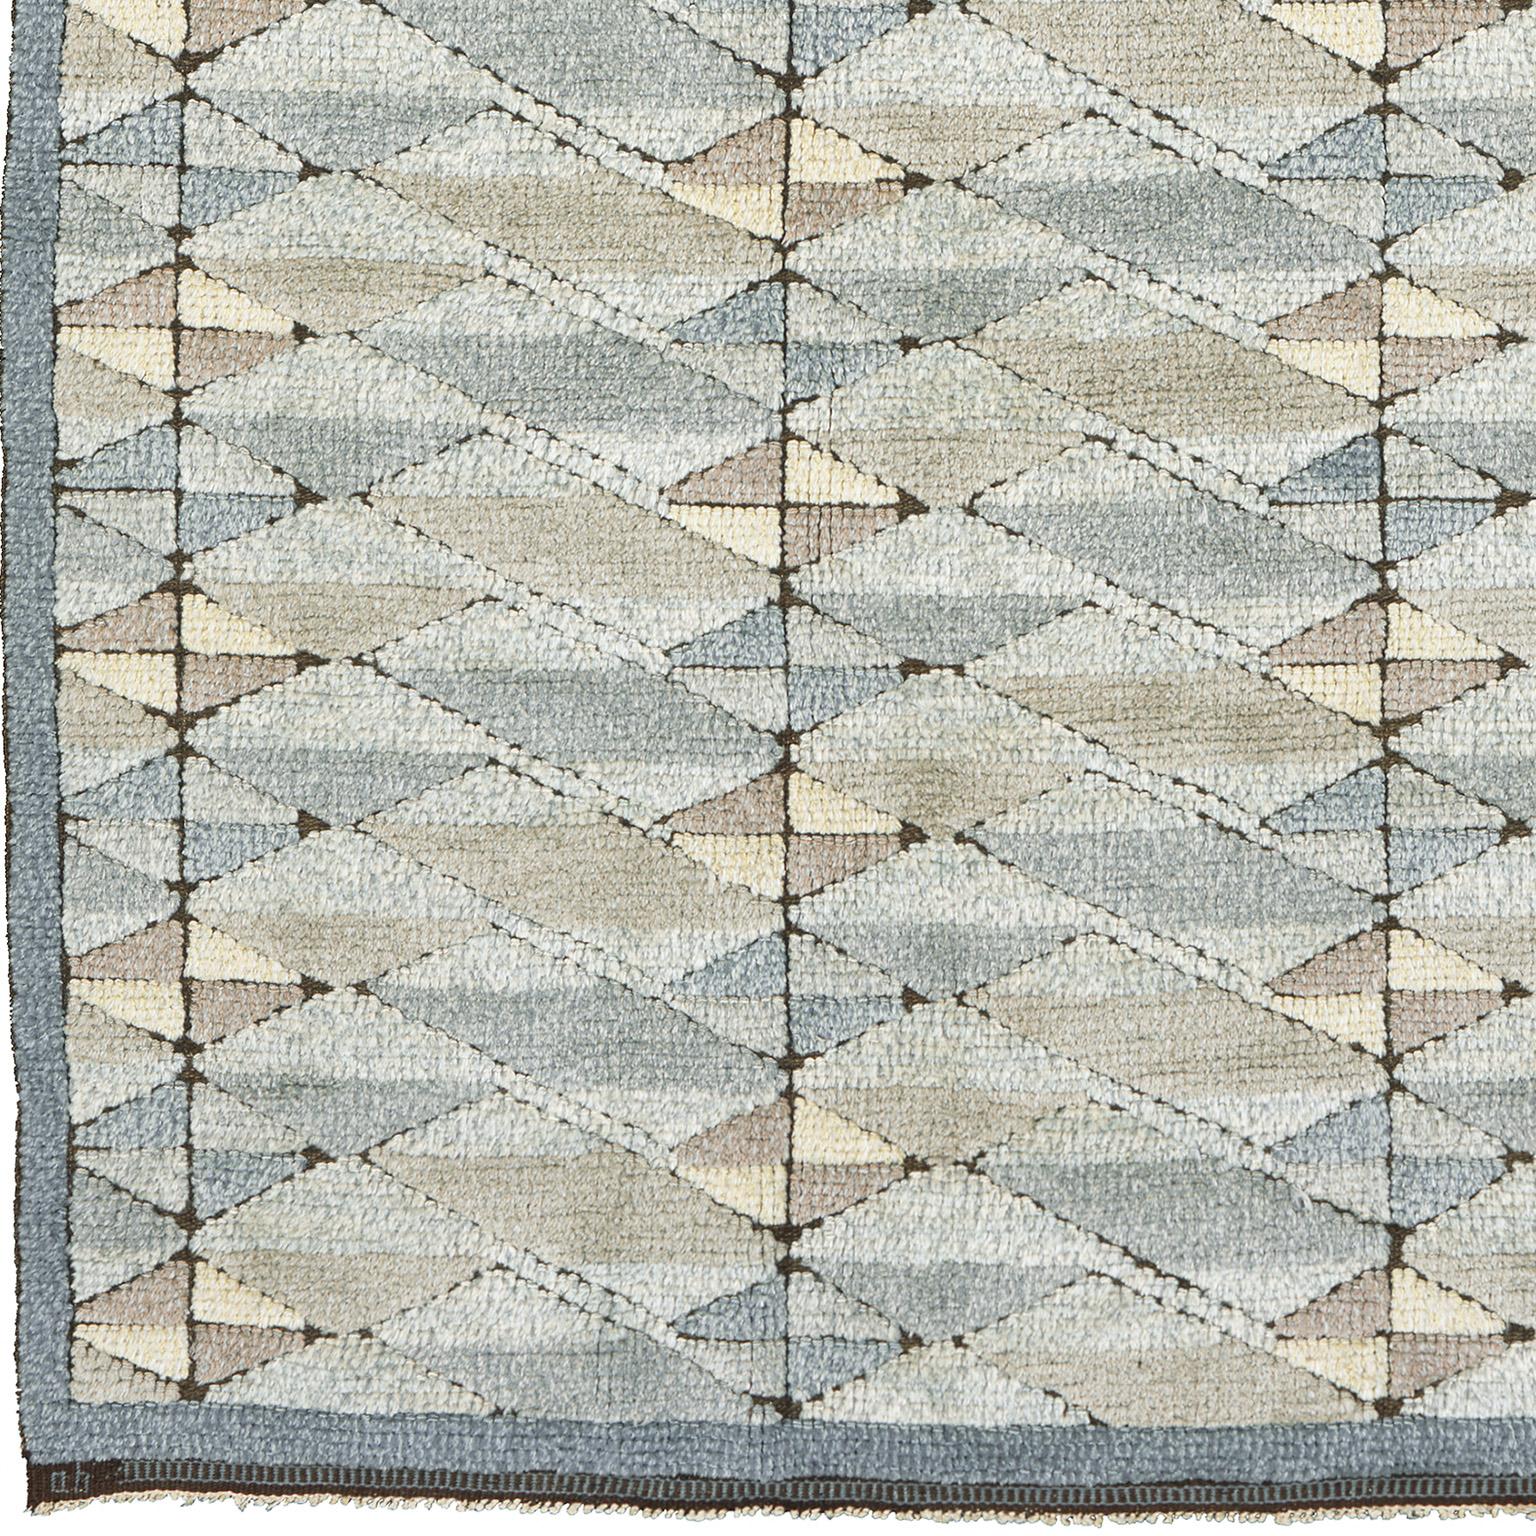 Vintage Swedish pile rug by Brita Grahn
Sweden, circa 1940-1950.
Initialled: ah.
Signed: Brita Grahn
Handwoven.